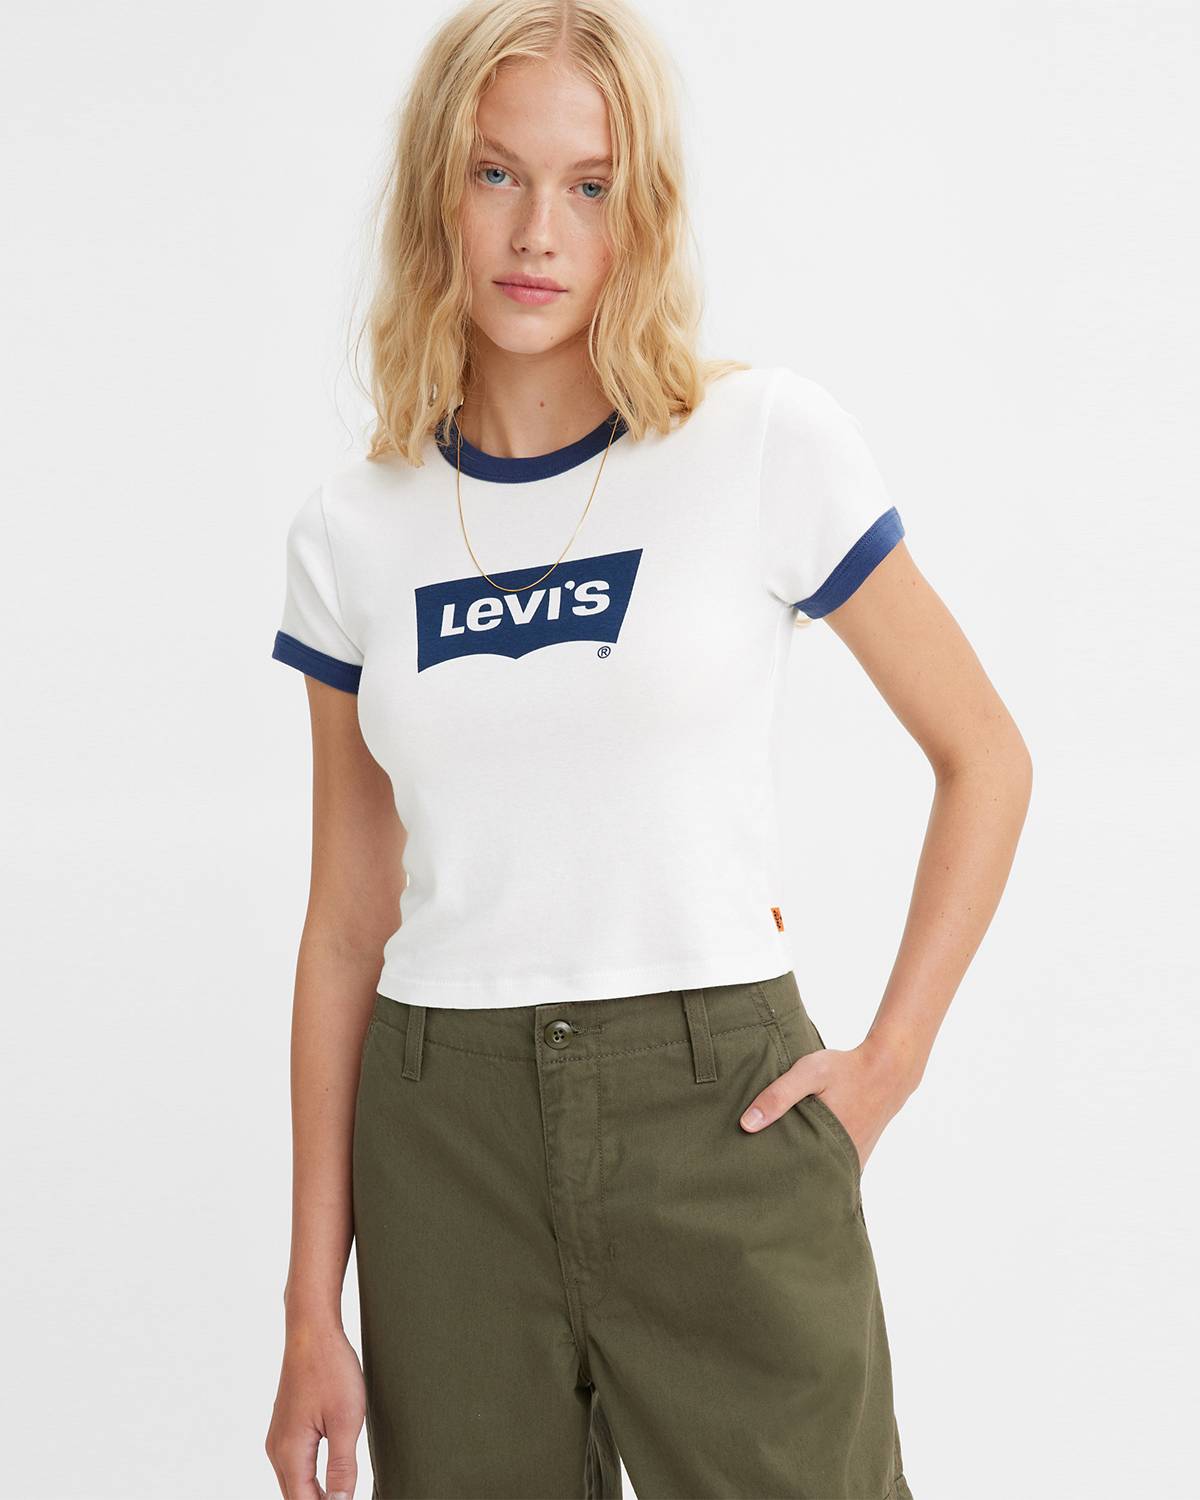 Women's Tops & T-Shirts, Tank Tops, Tees & more